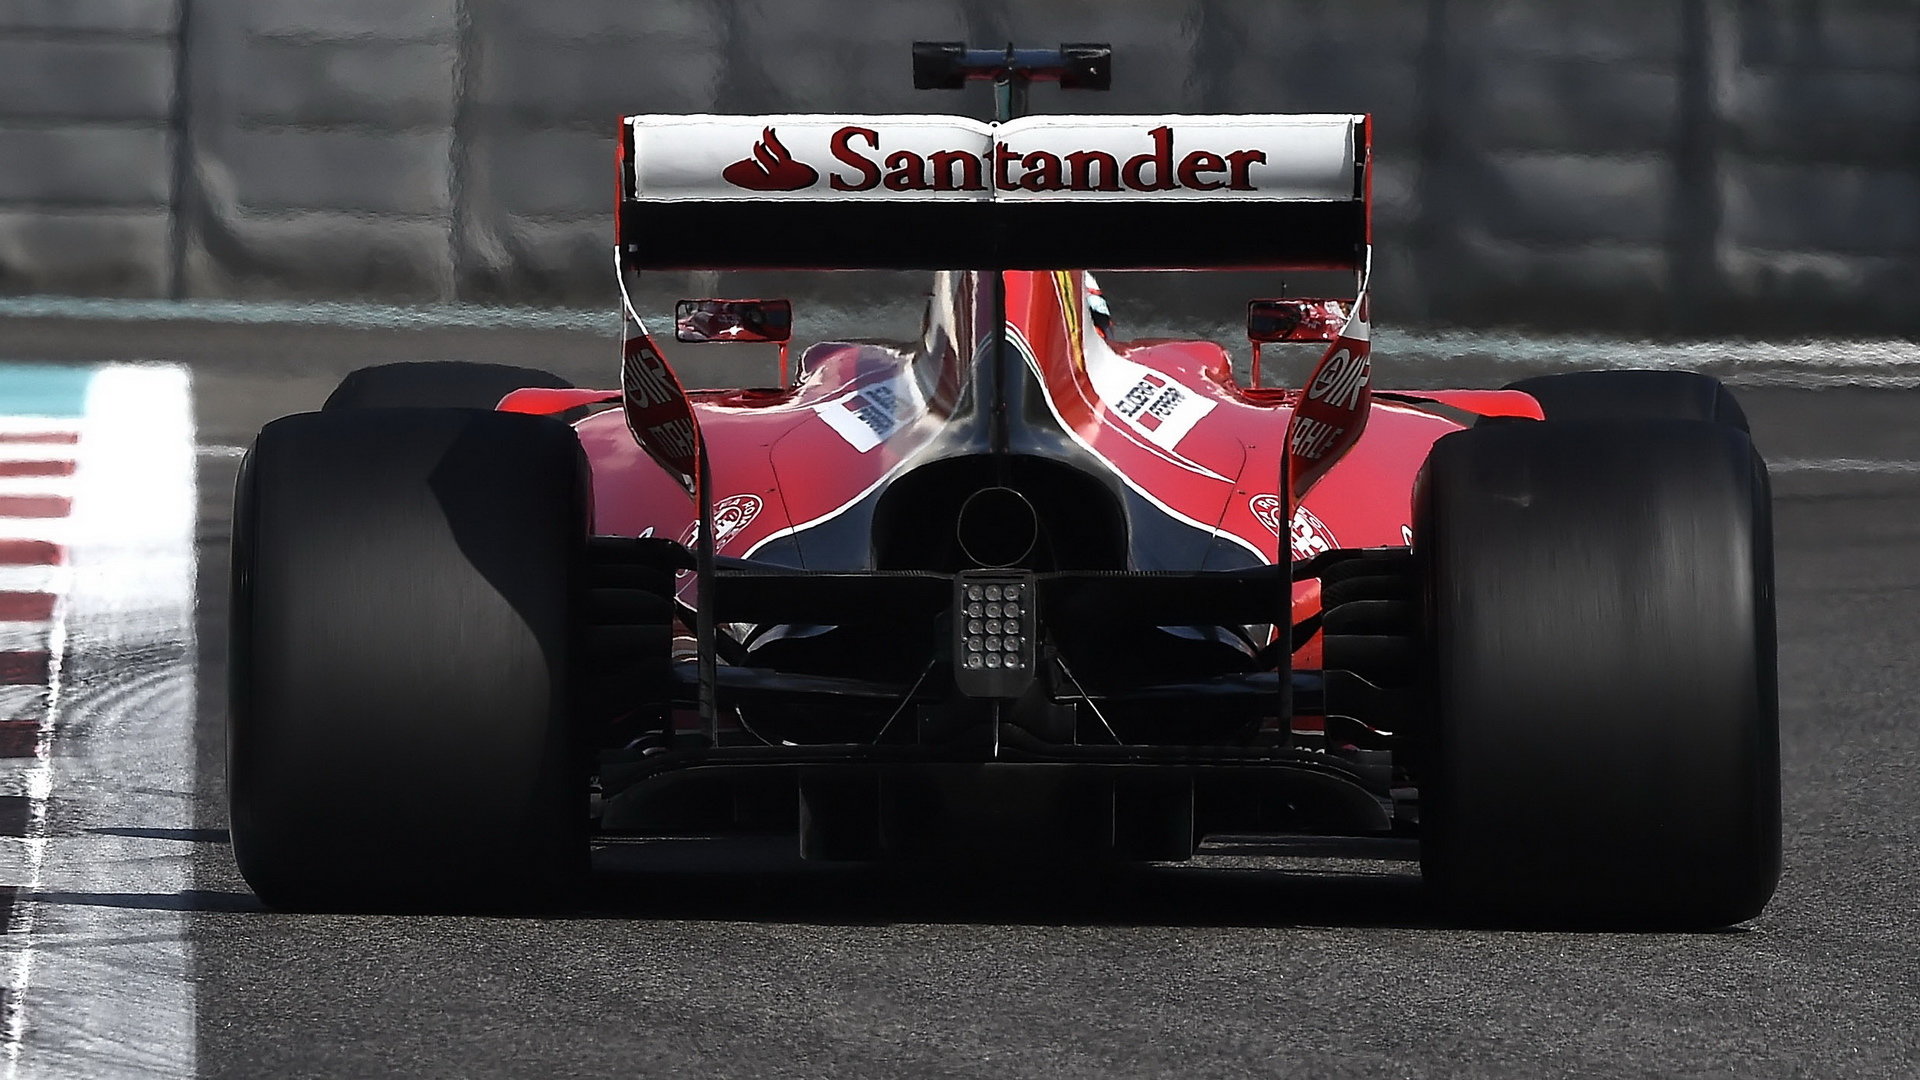 Ferrari v posledním testu pneumatik pro rok 2017 v Abú Zabí